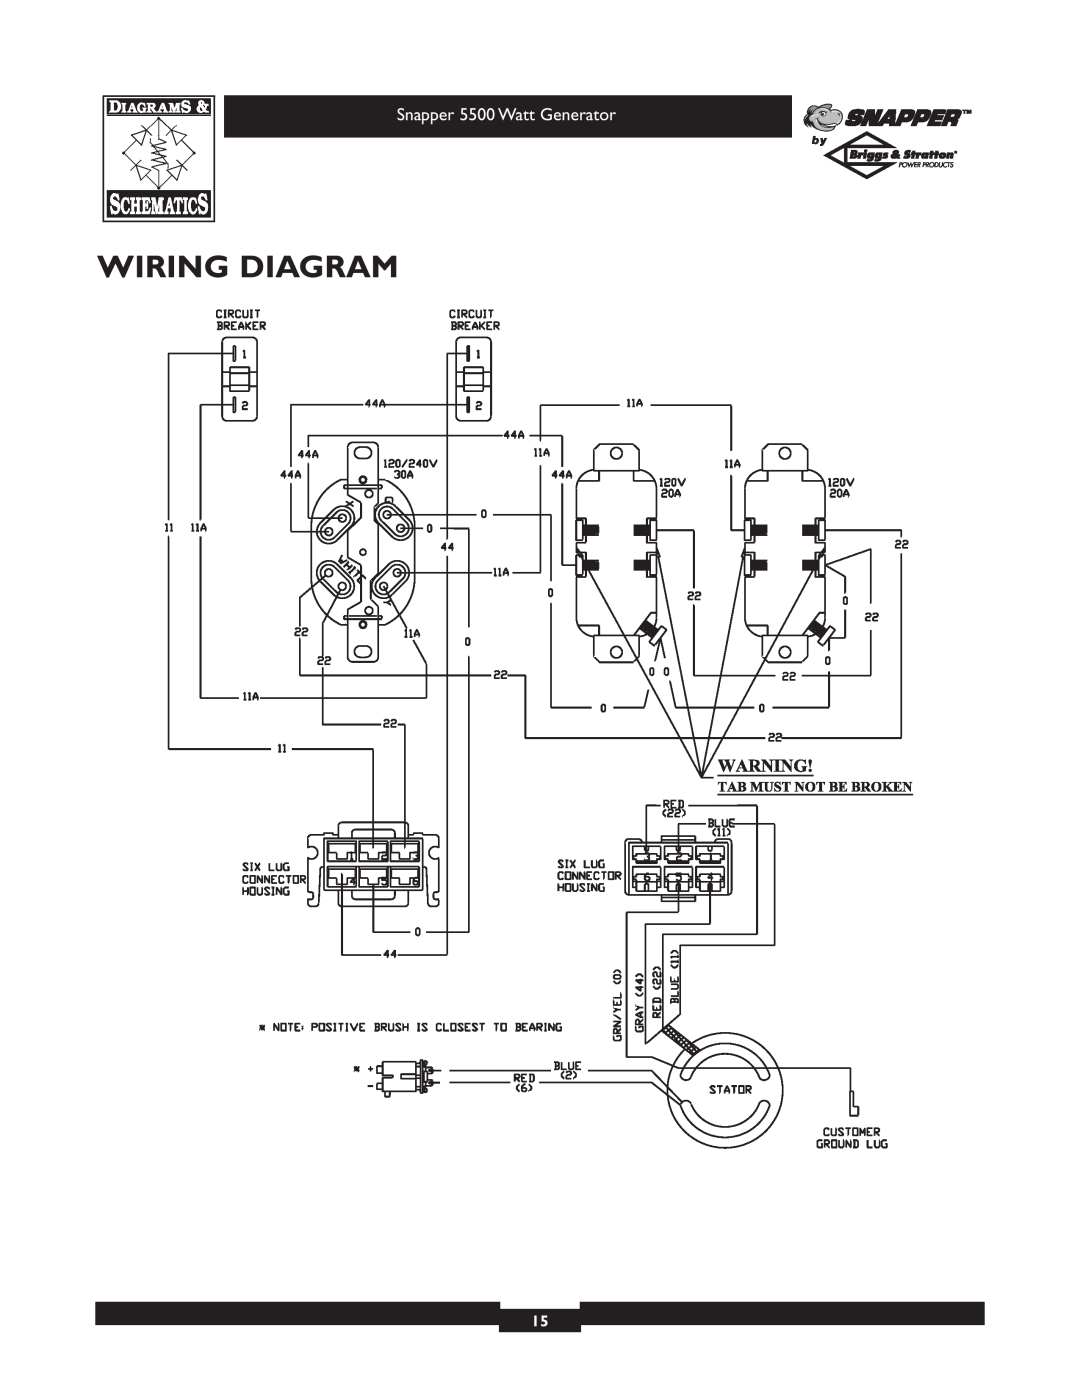 Snapper 1668-0 owner manual Wiring Diagram, Snapper 5500 Watt Generator 